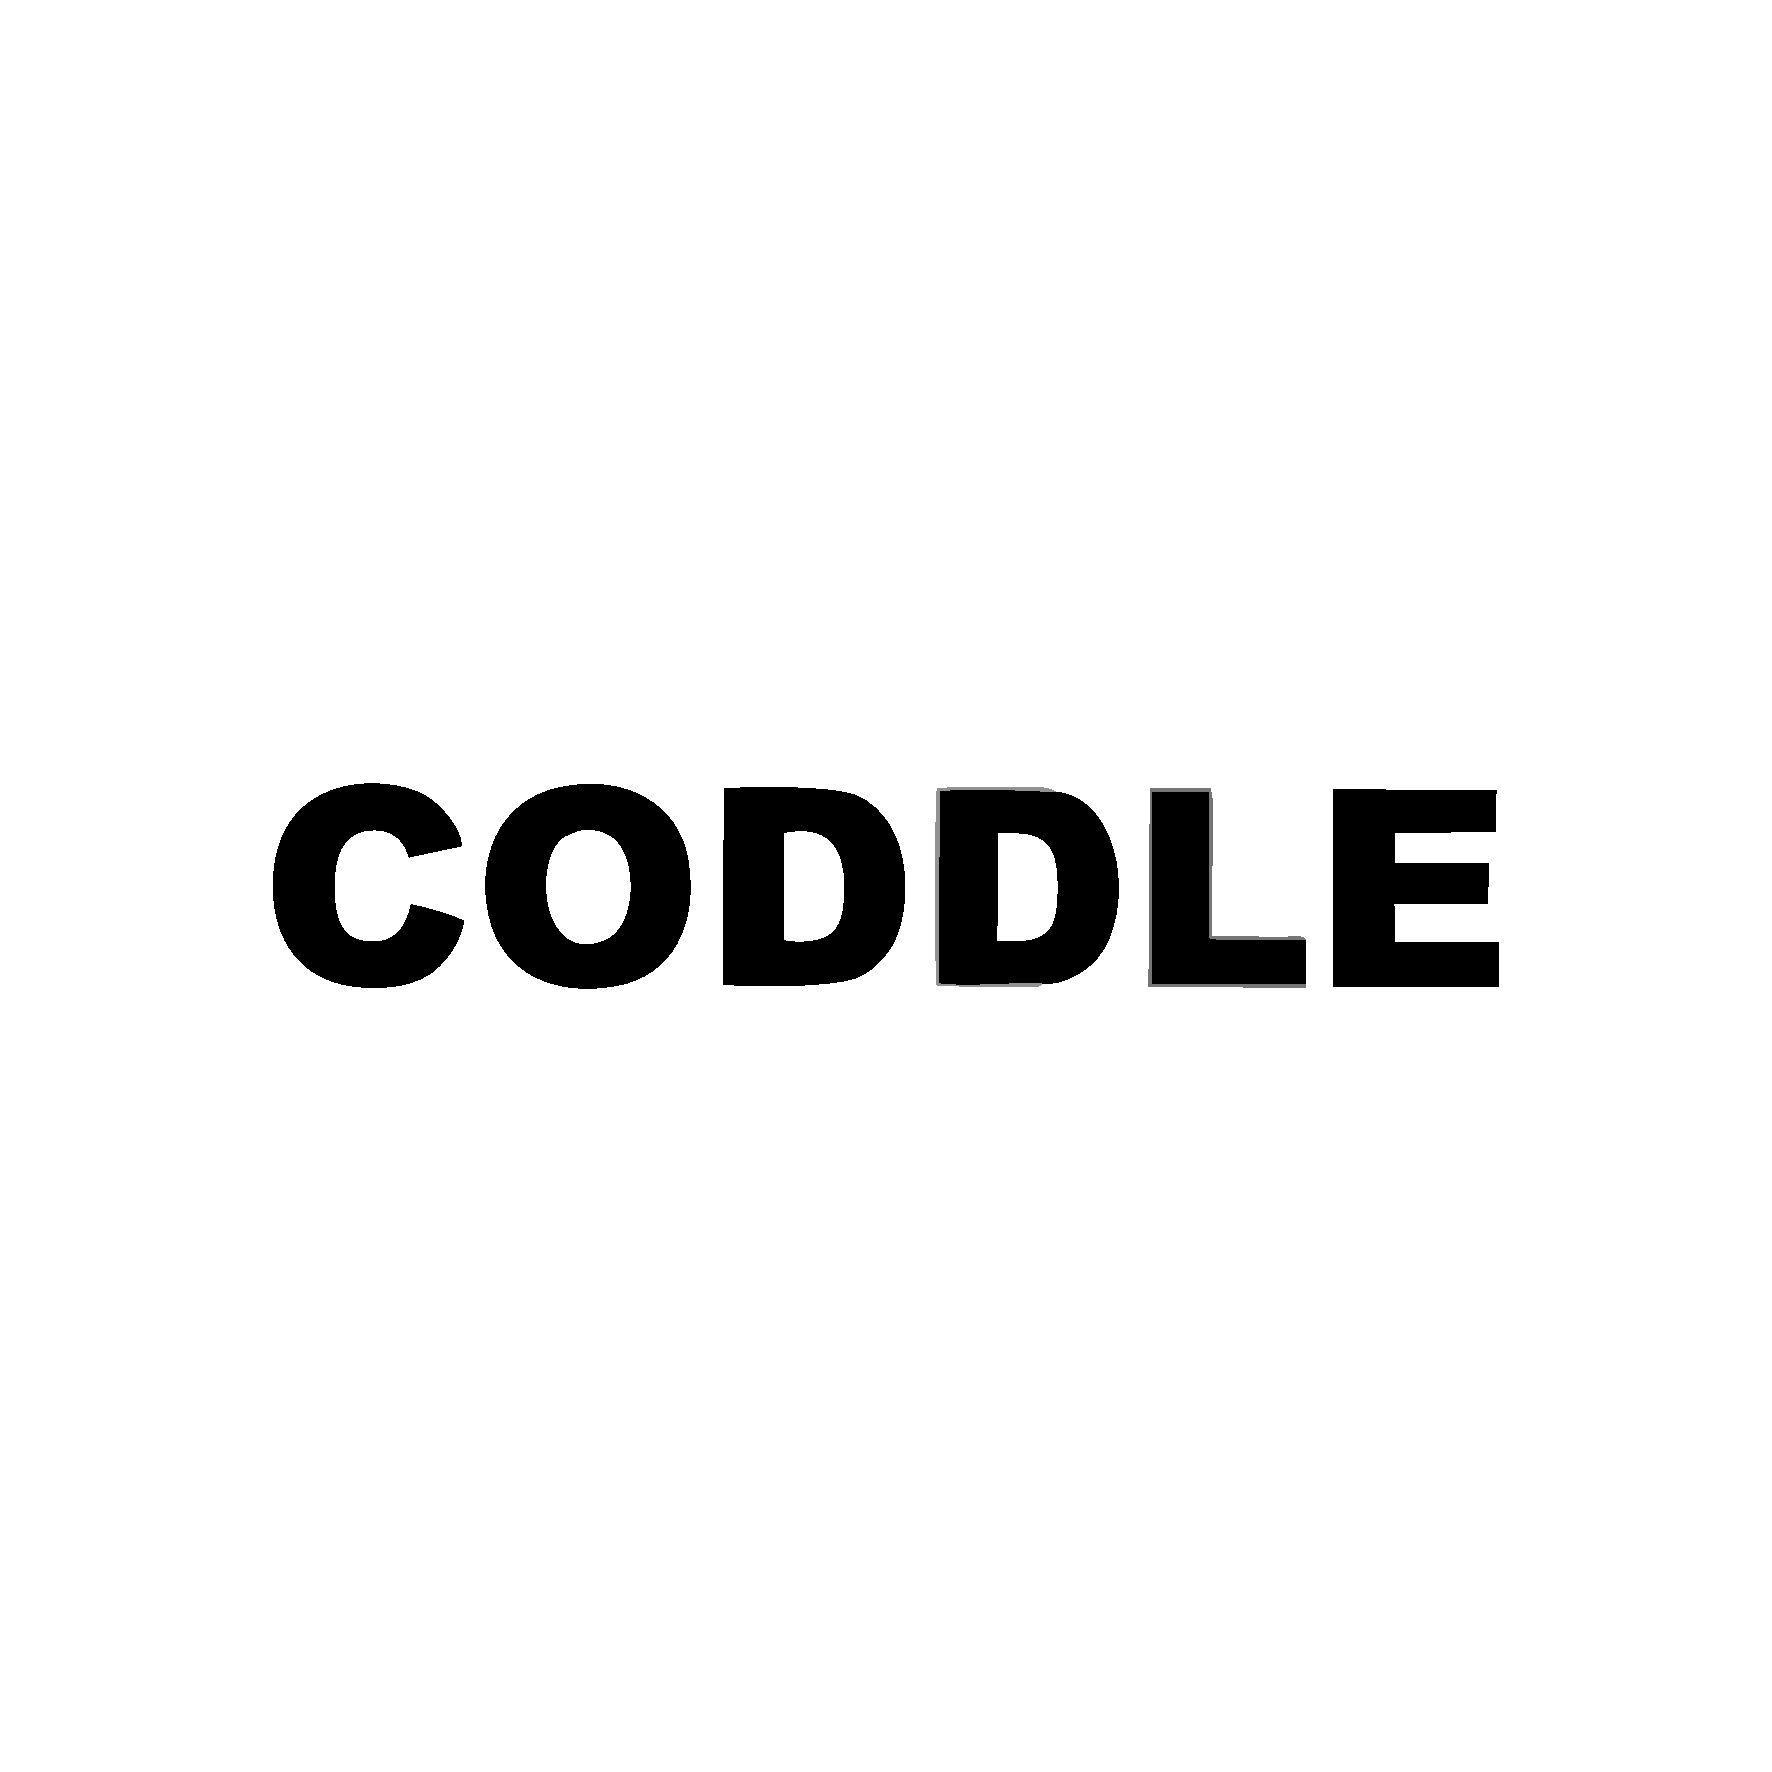 coddle